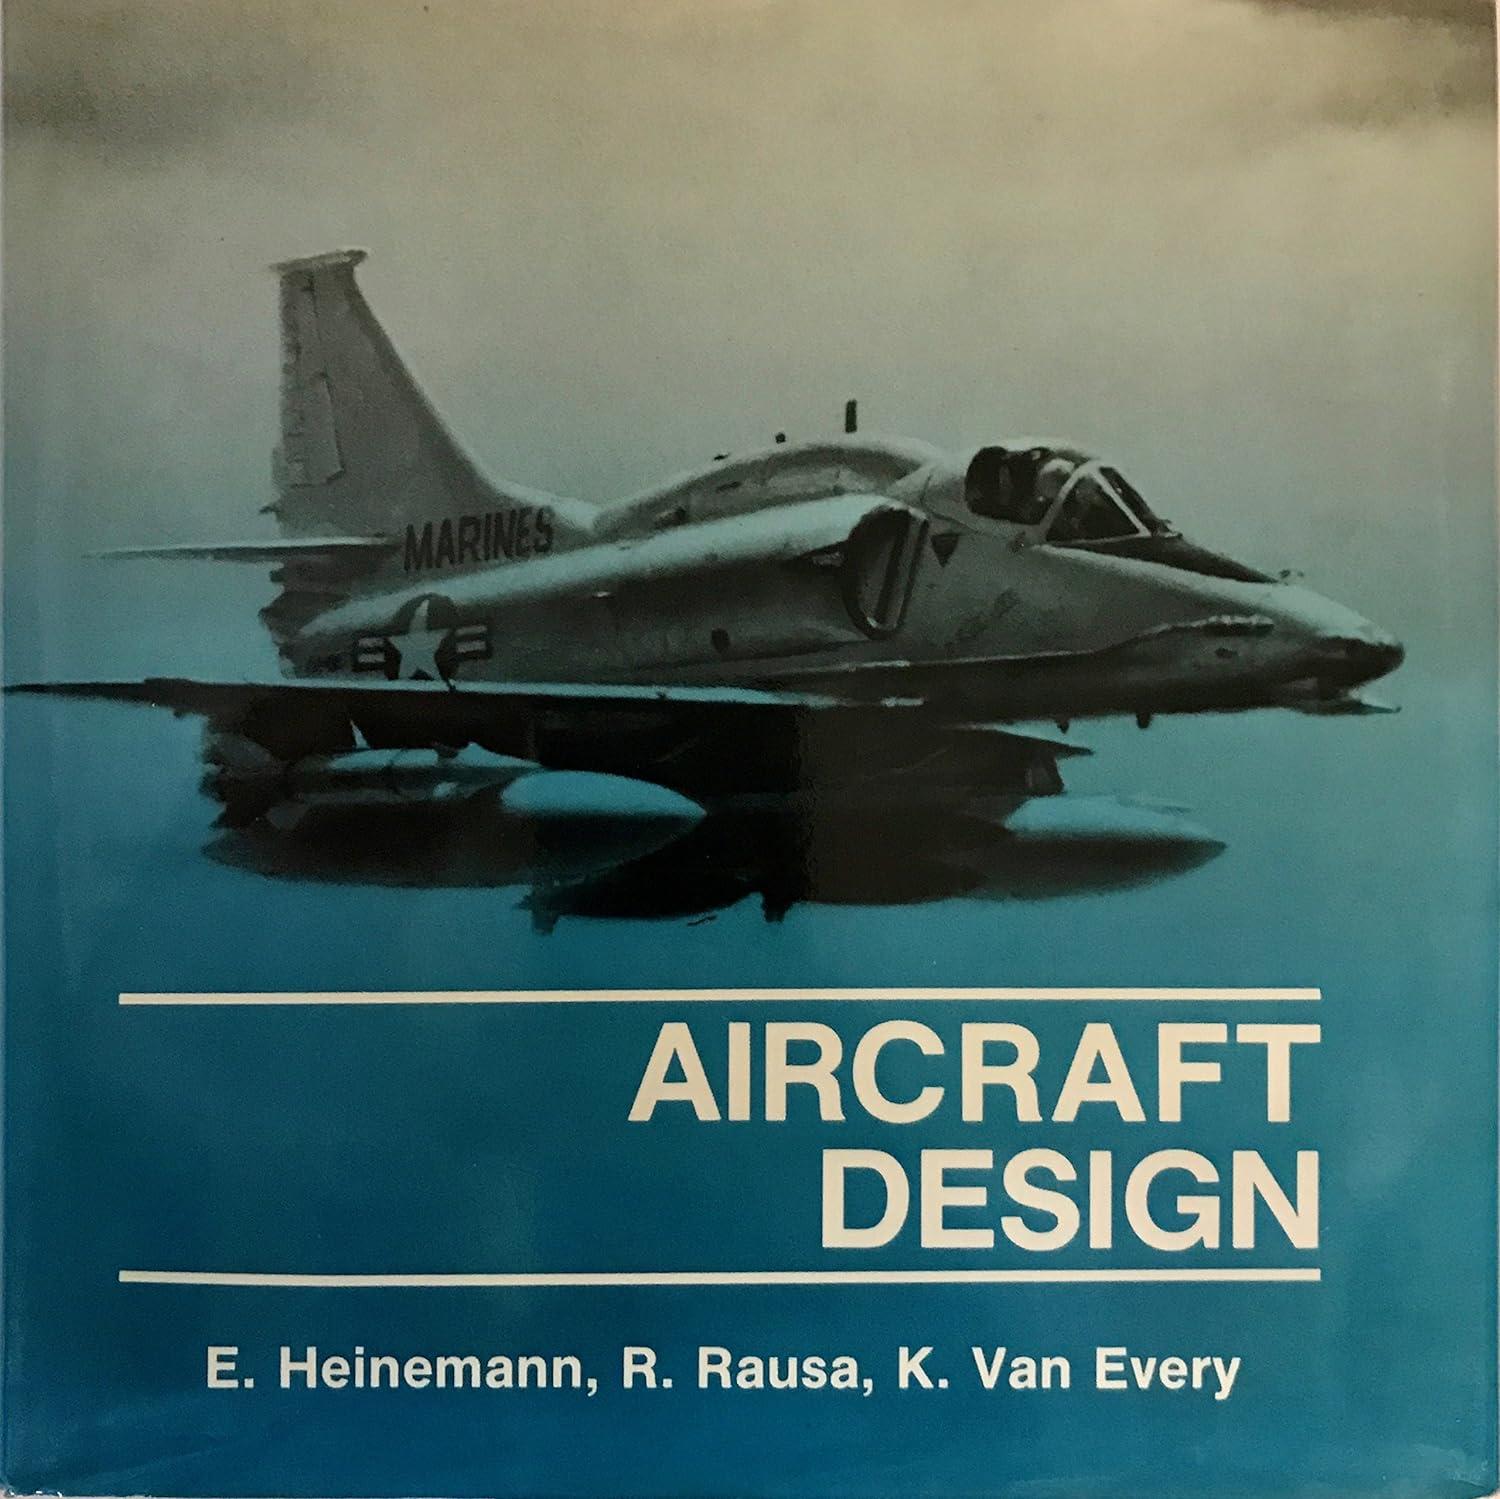 aircraft design 1st edition edward h. heinemann, r. rausa, k. van every 0933852150, 978-0933852150